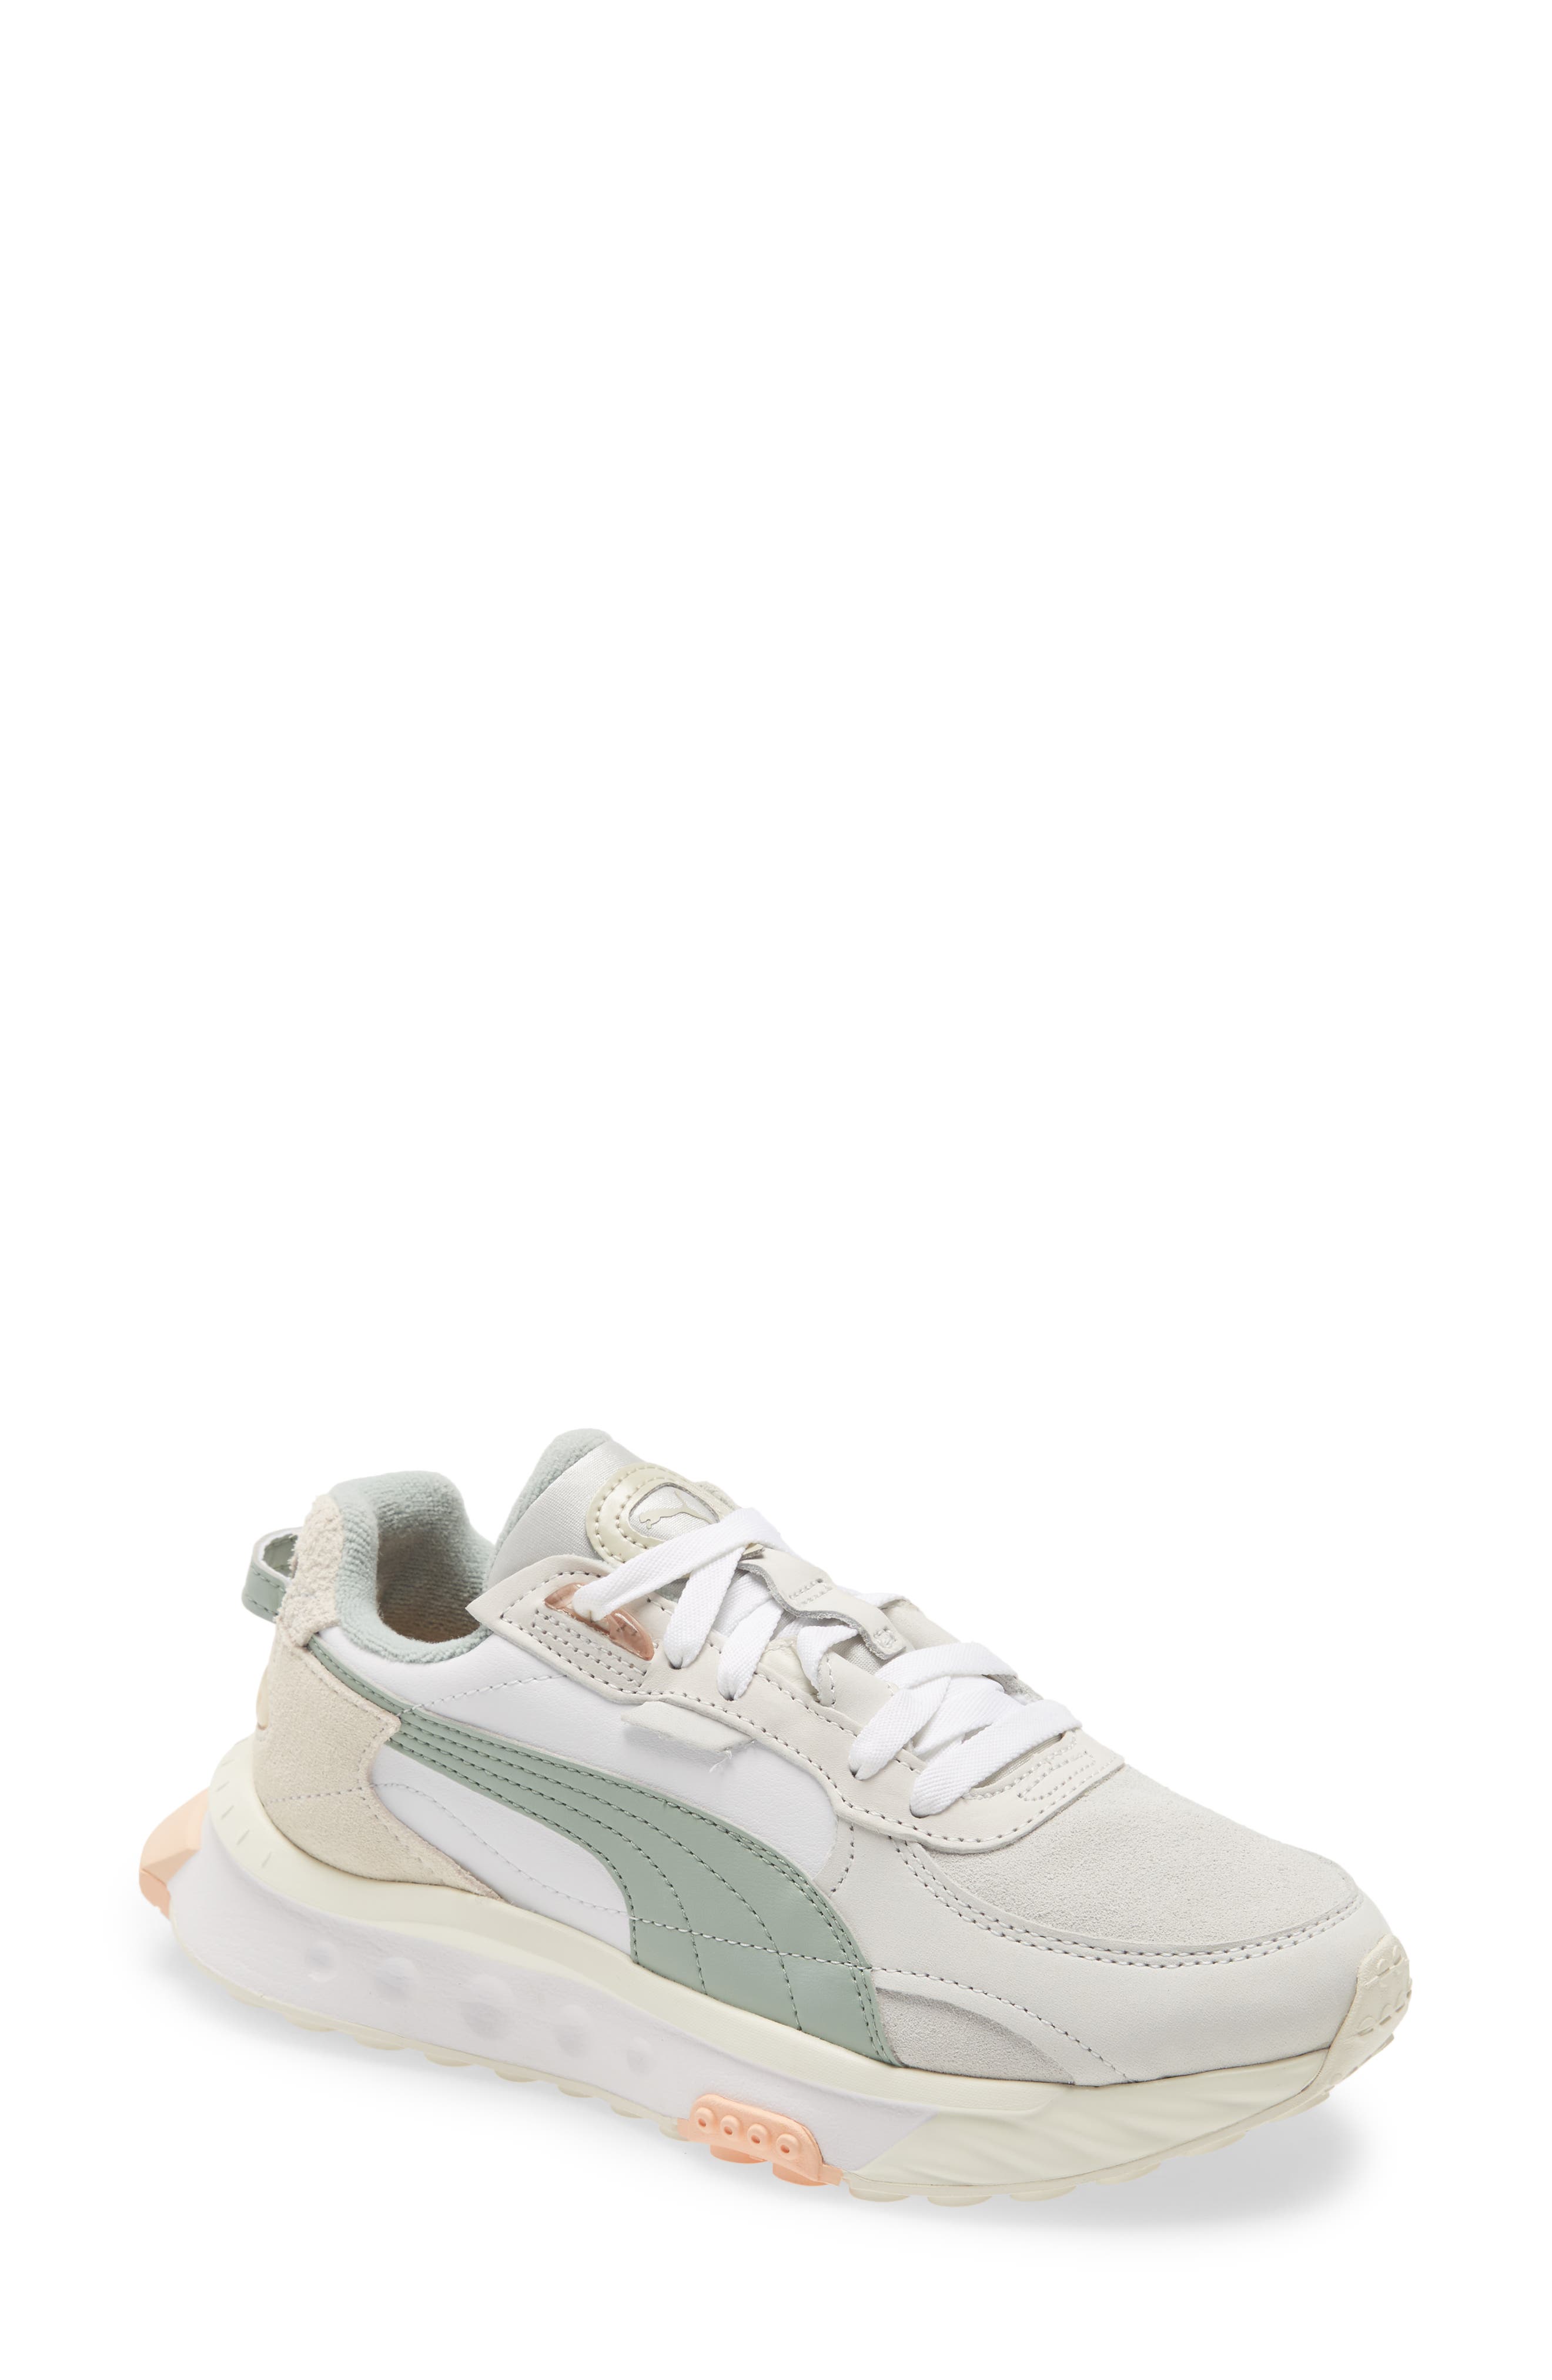 puma platform sneakers grey